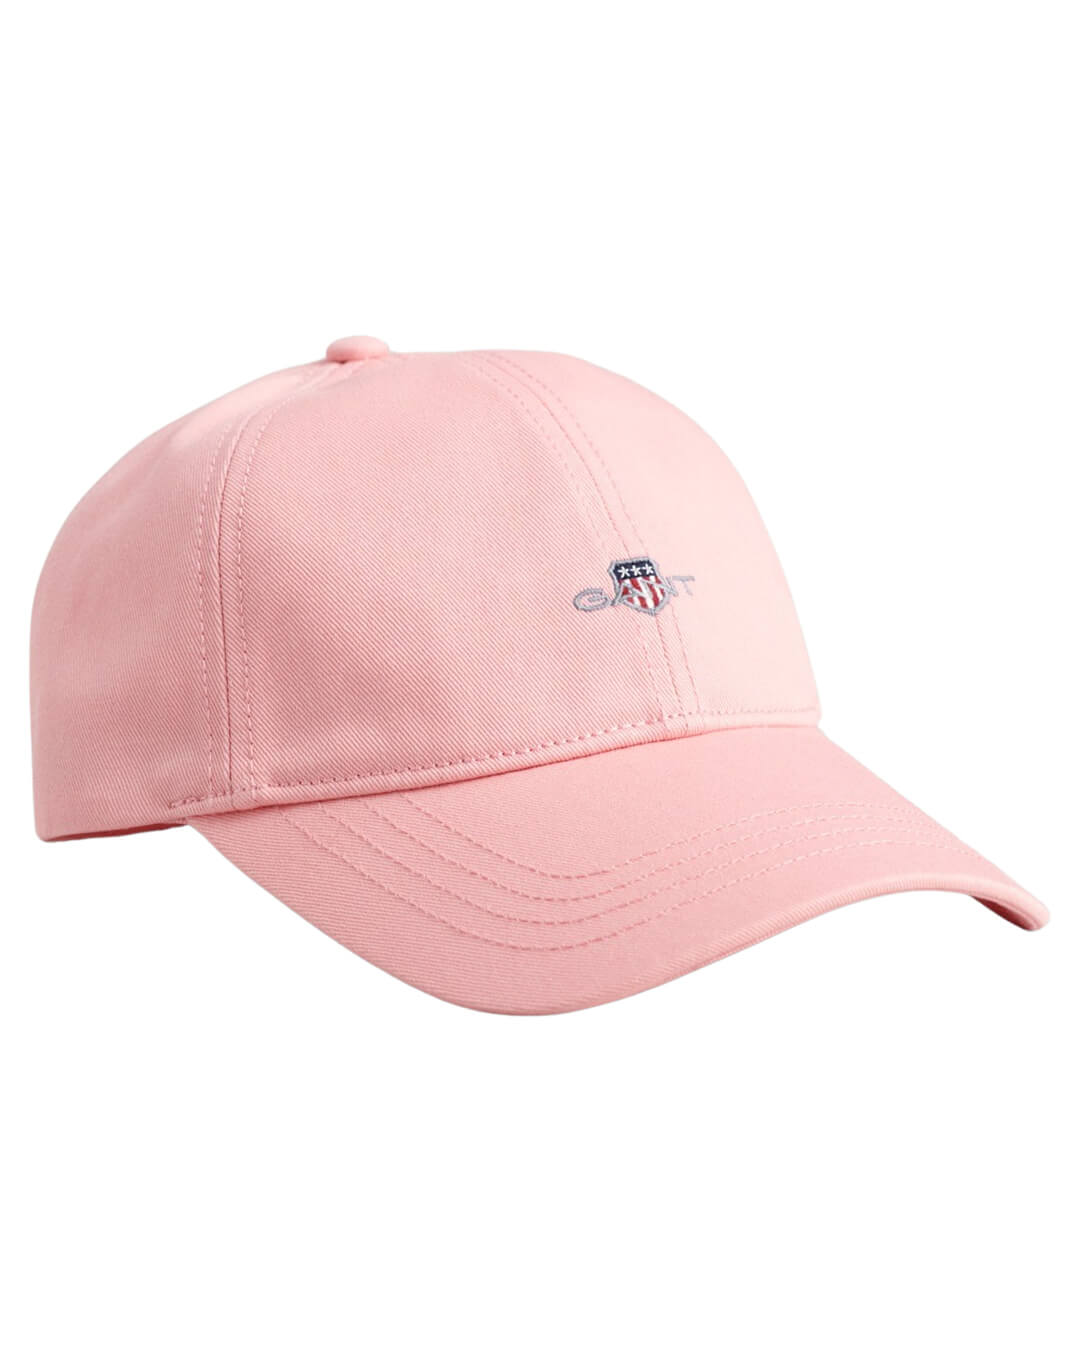 Gant Caps Gant Light Pink Cotton Twill Cap